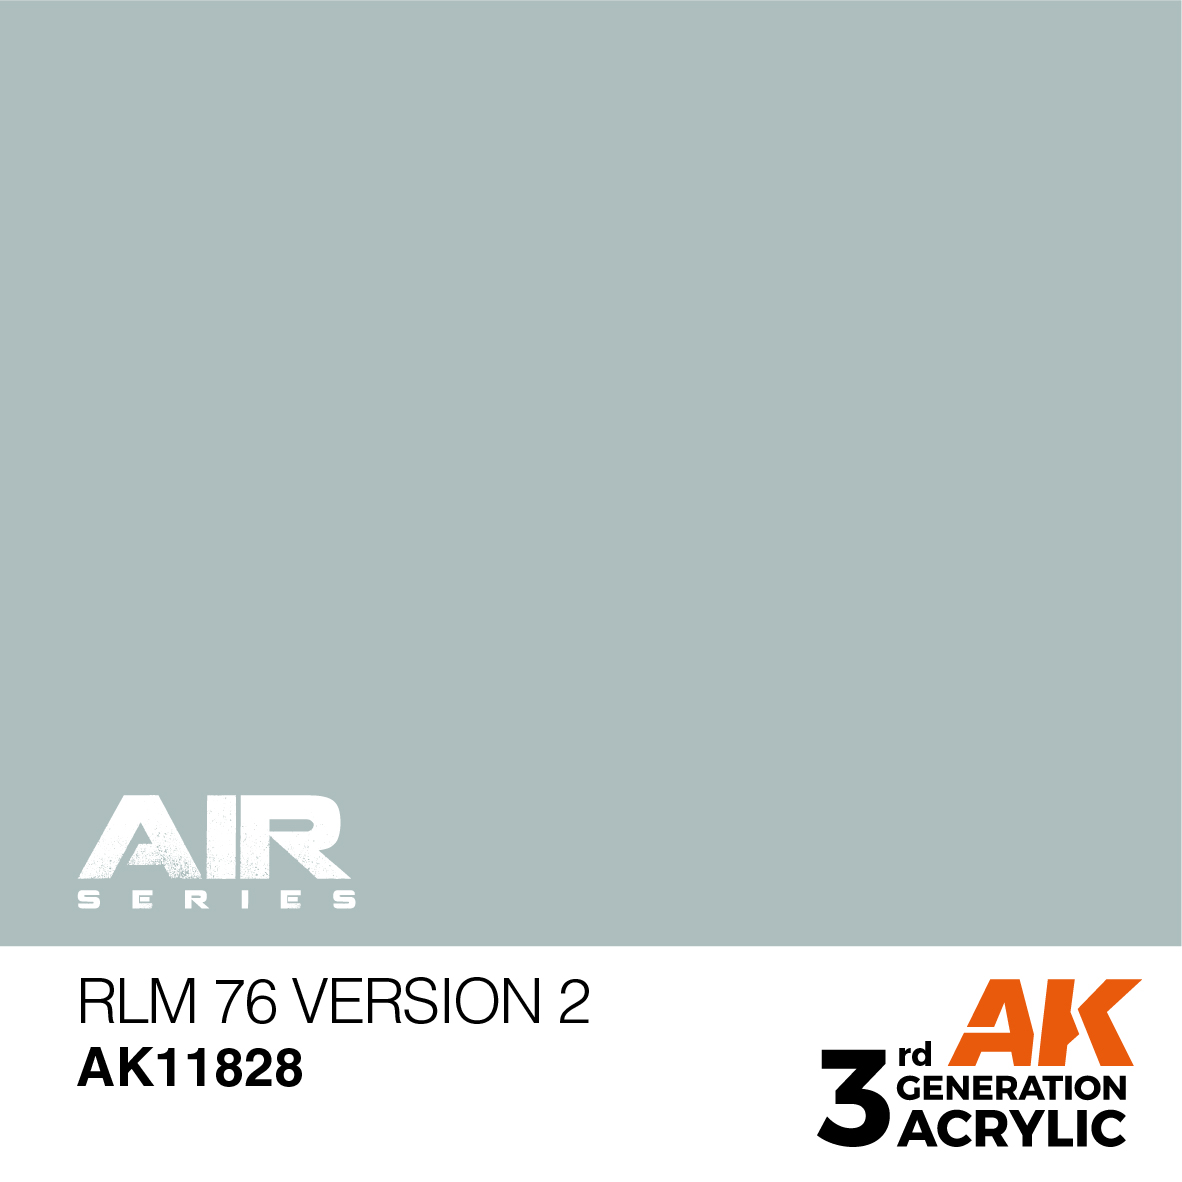 RLM 76 Version 2 – AIR